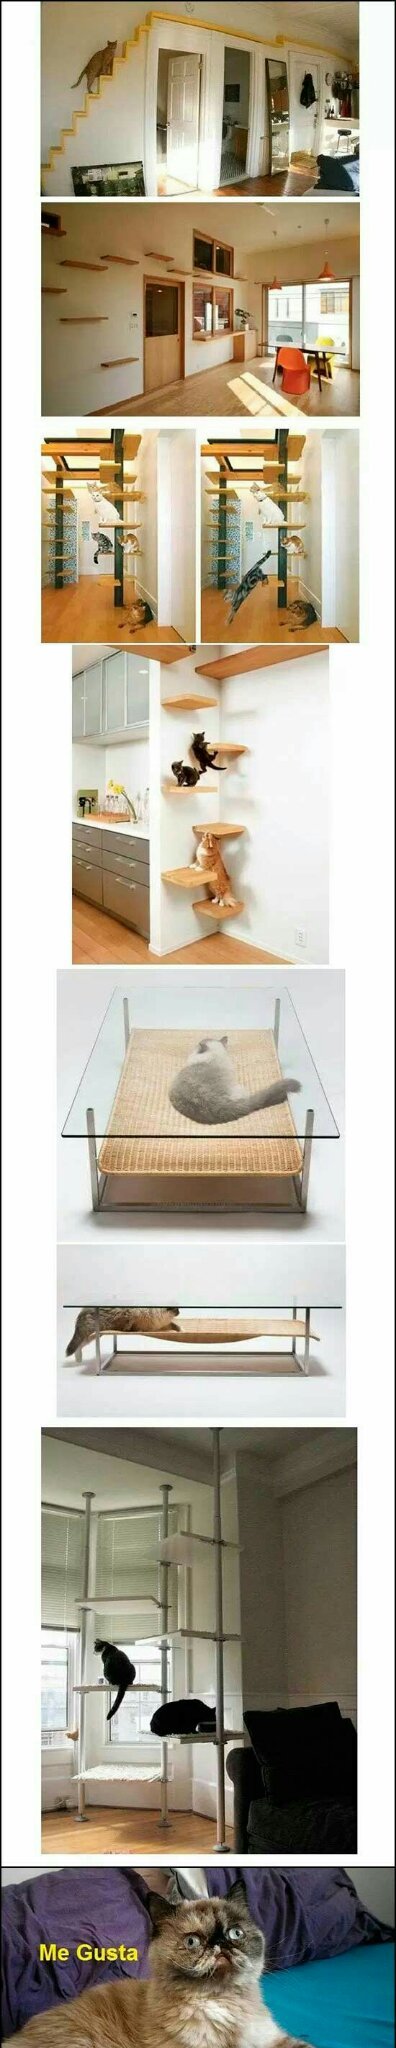 La casa ideal de todo gato - meme